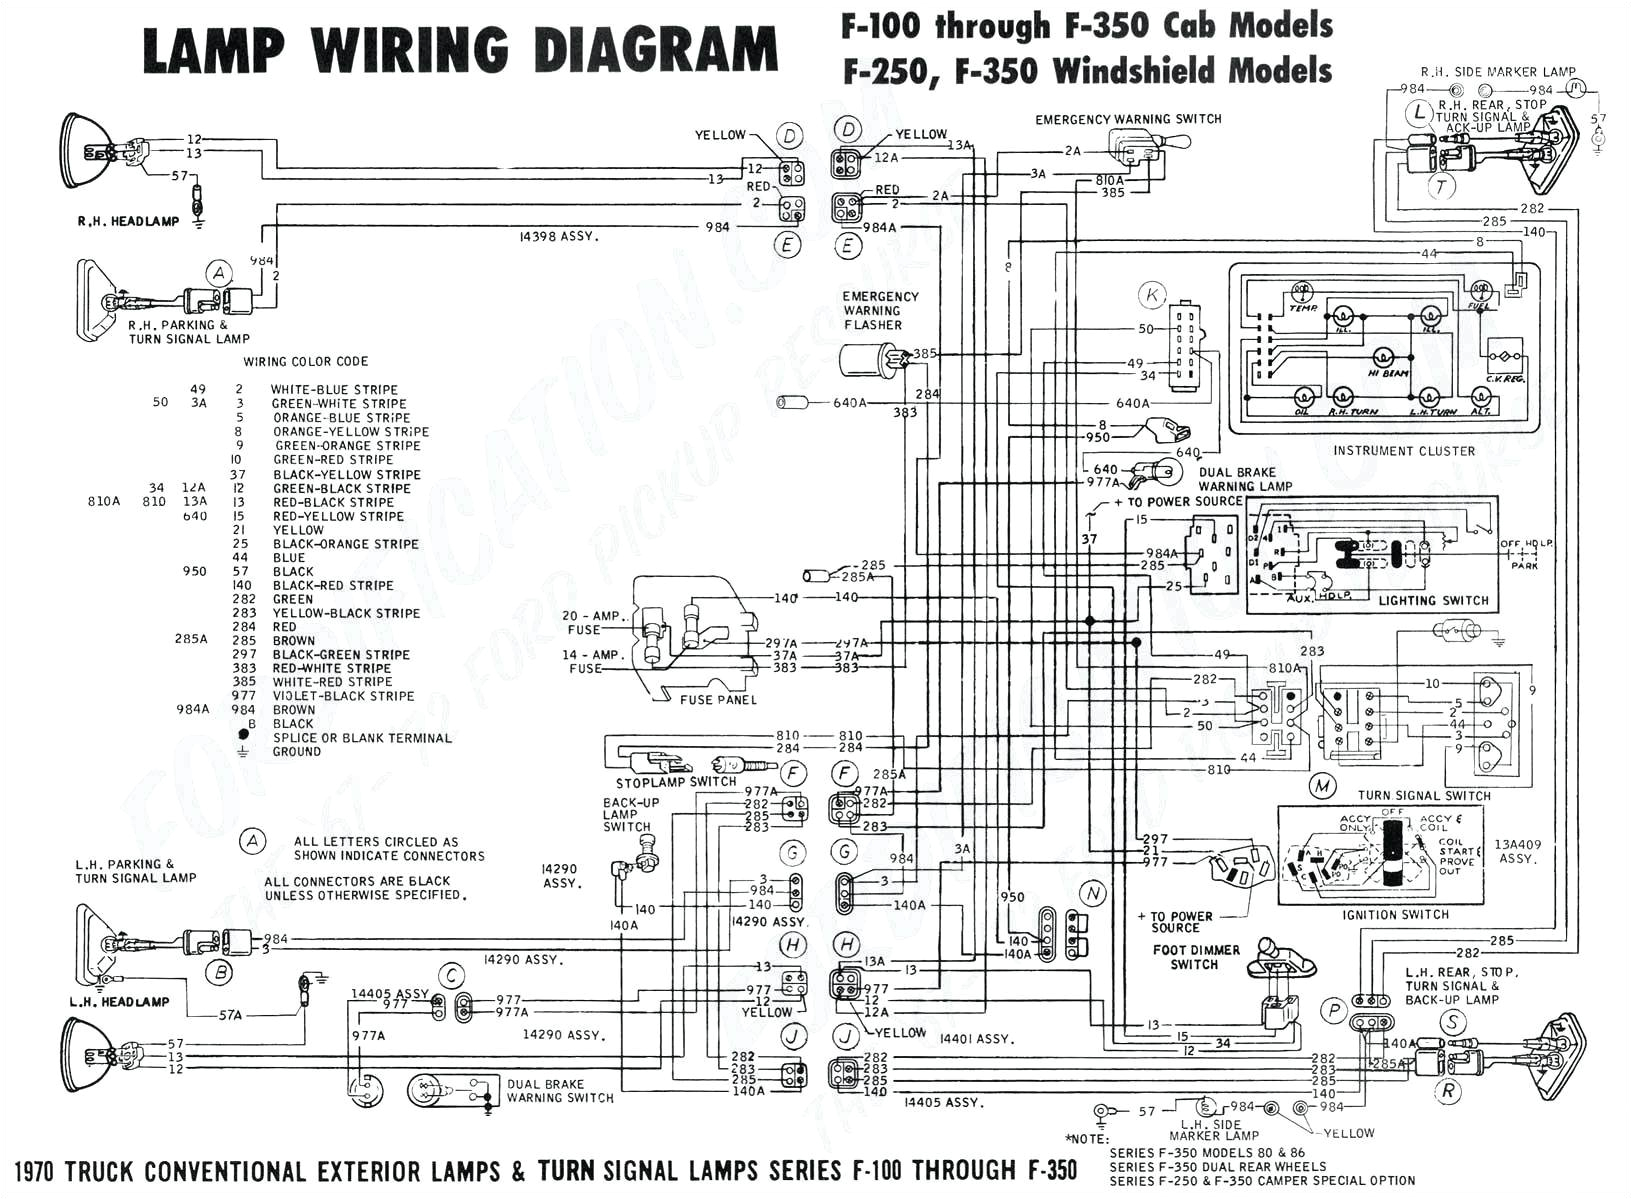 in cab fuse panel diagram 2002 sl2 wiring diagram used 98 saturn fuse box diagram wiring